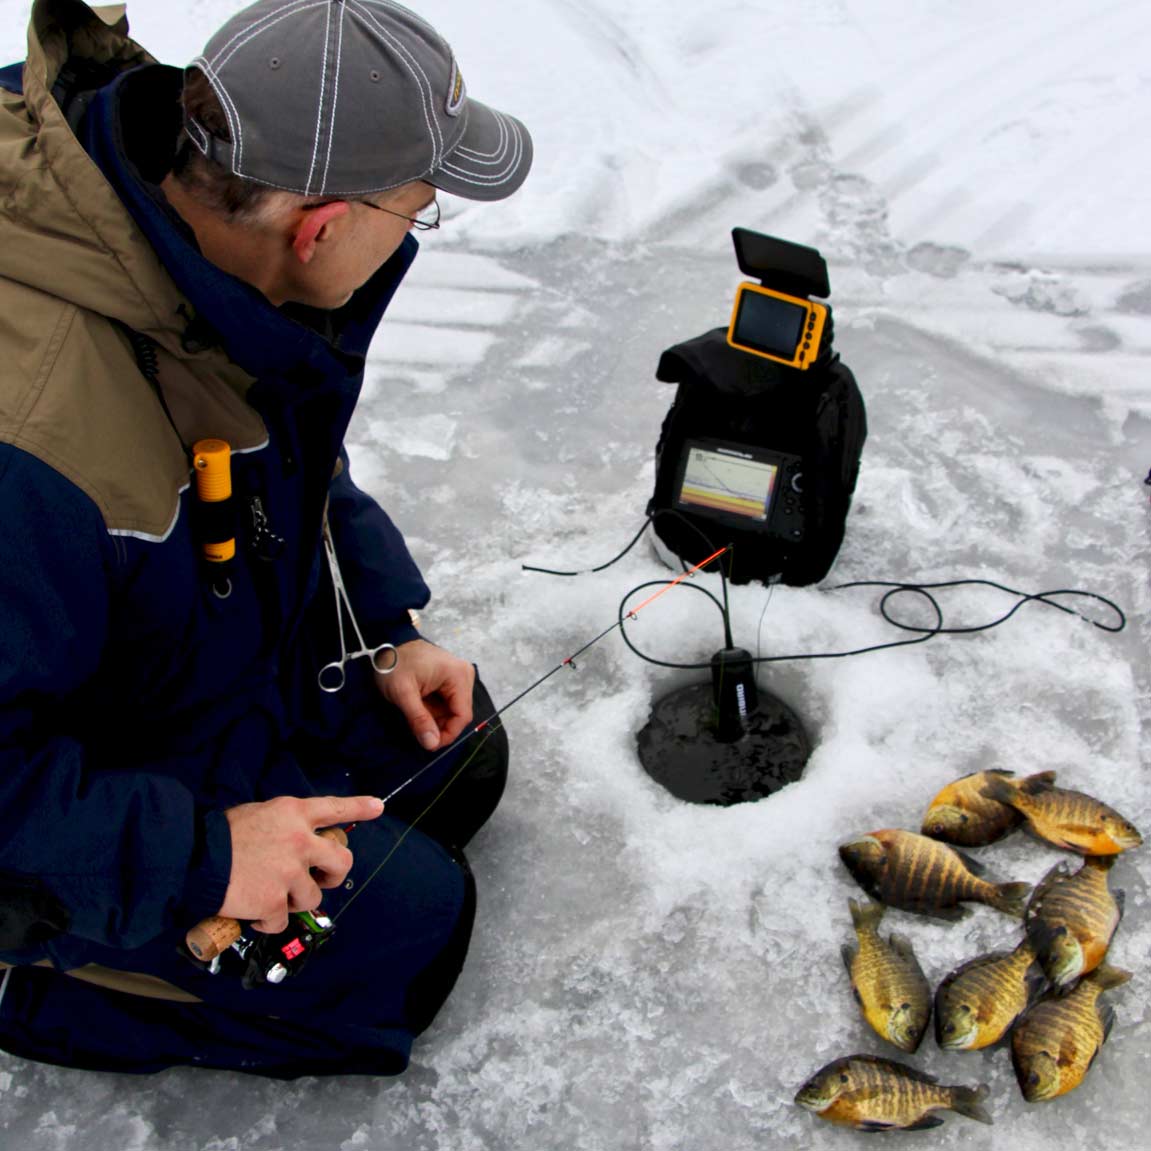 Angler ice fishing for bluegill.